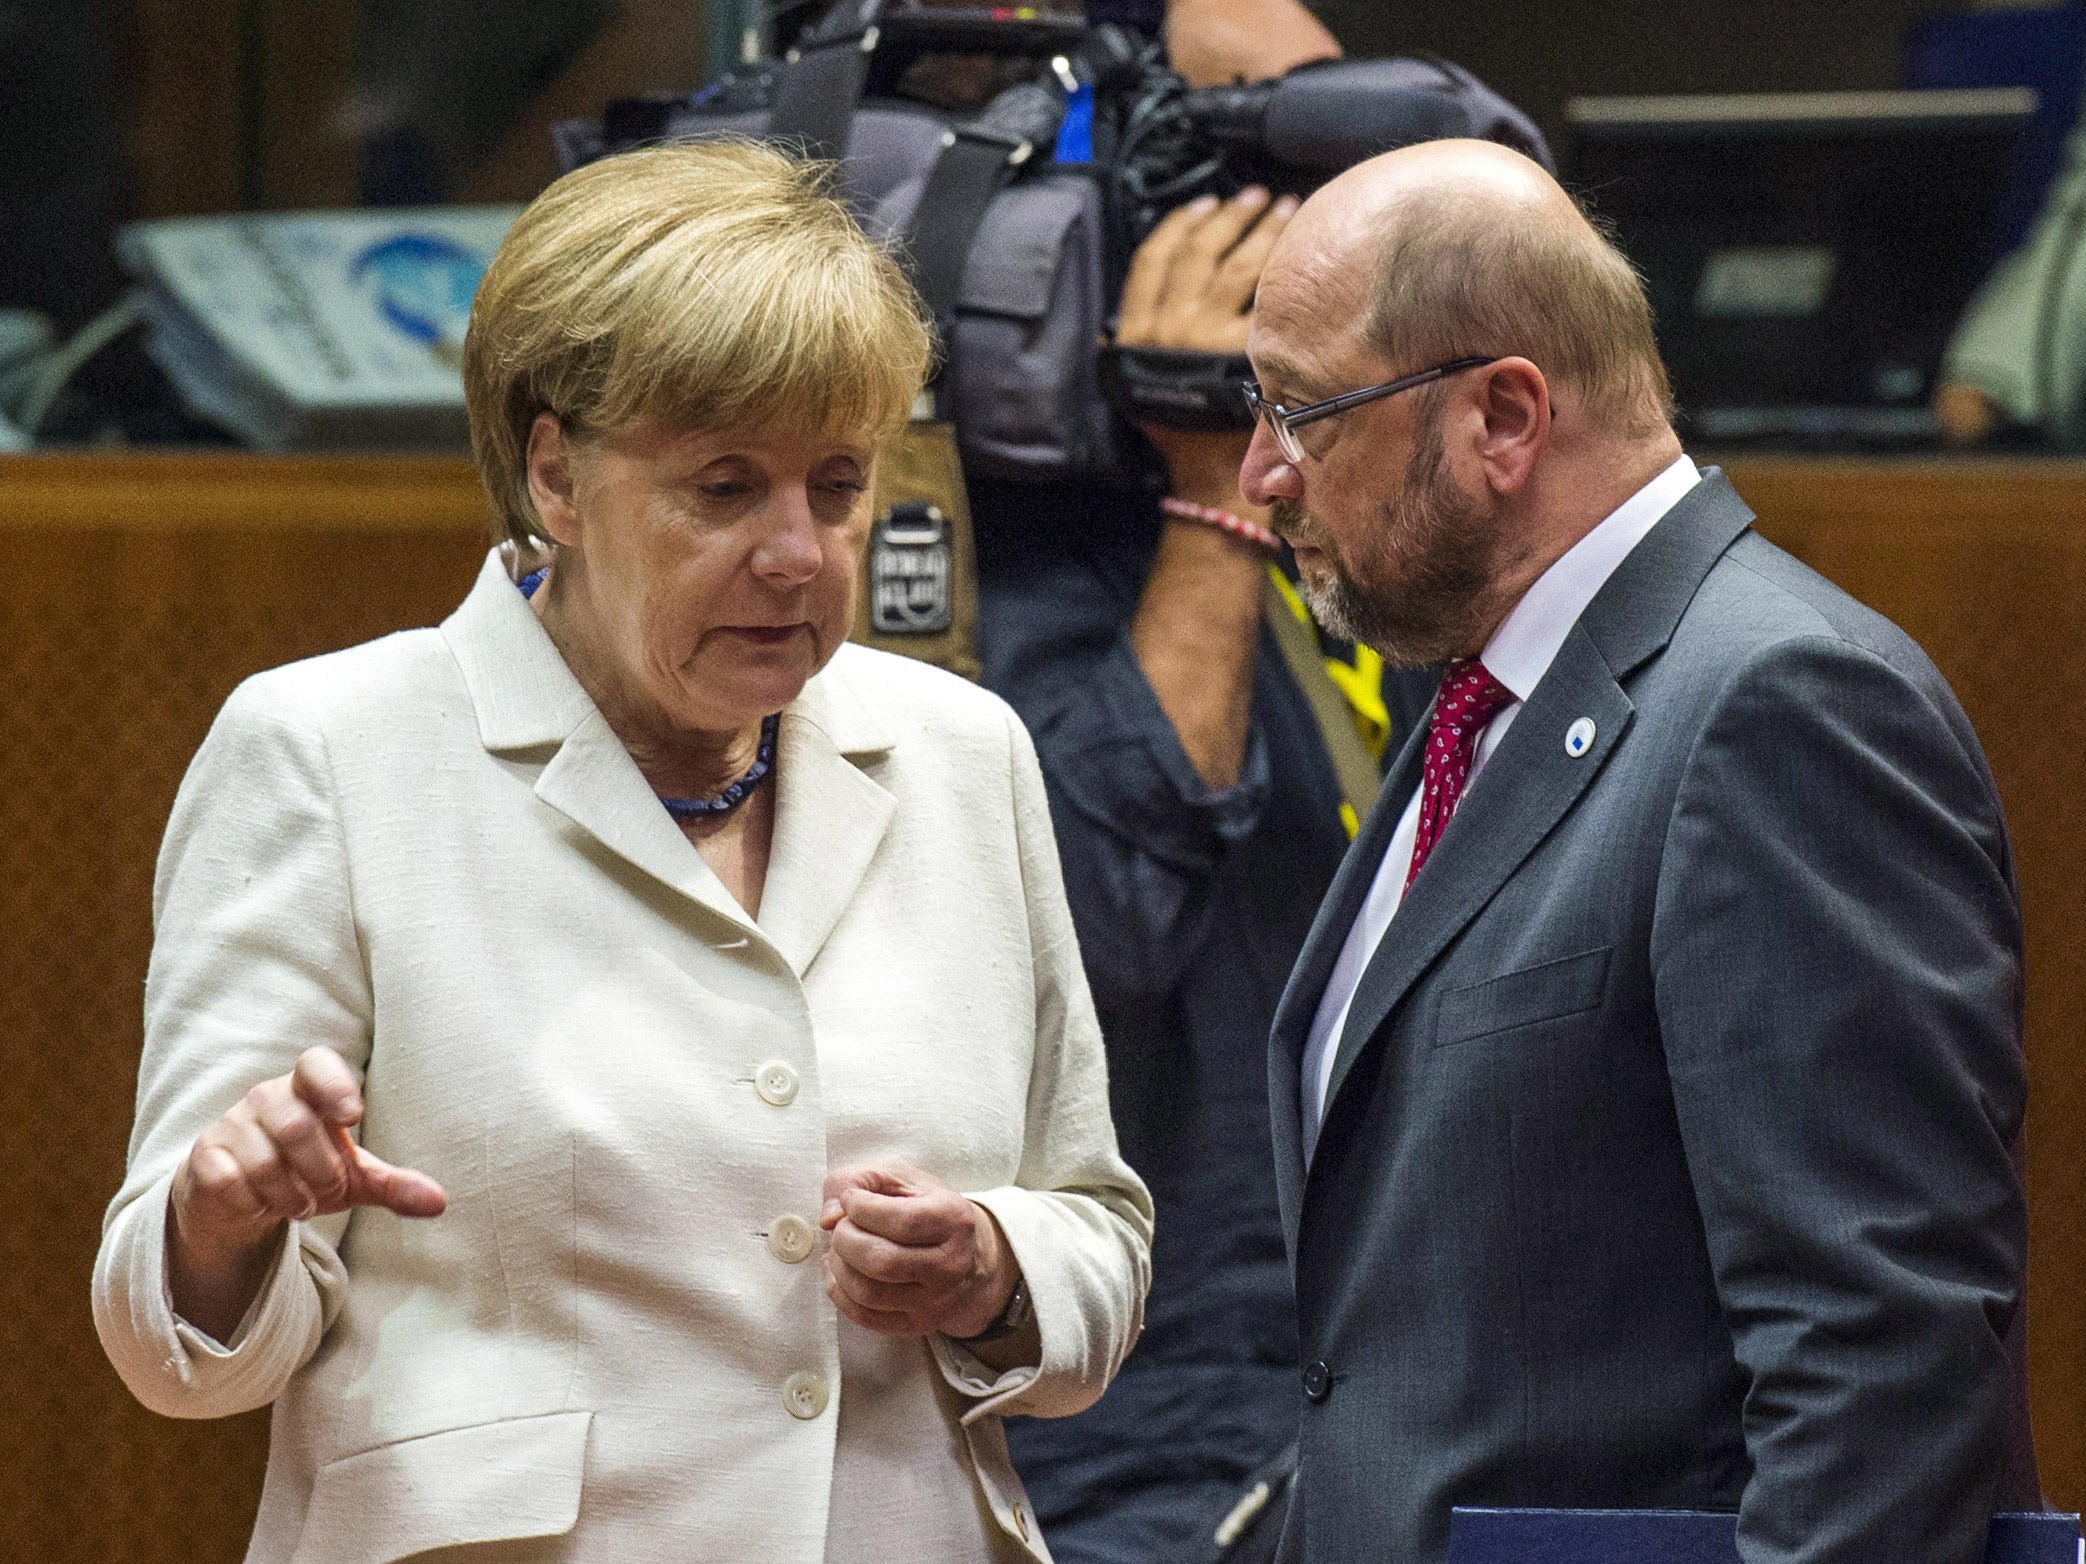 German Chancellor Angela Merkel, left, confers with European Parliament President Martin Schulz